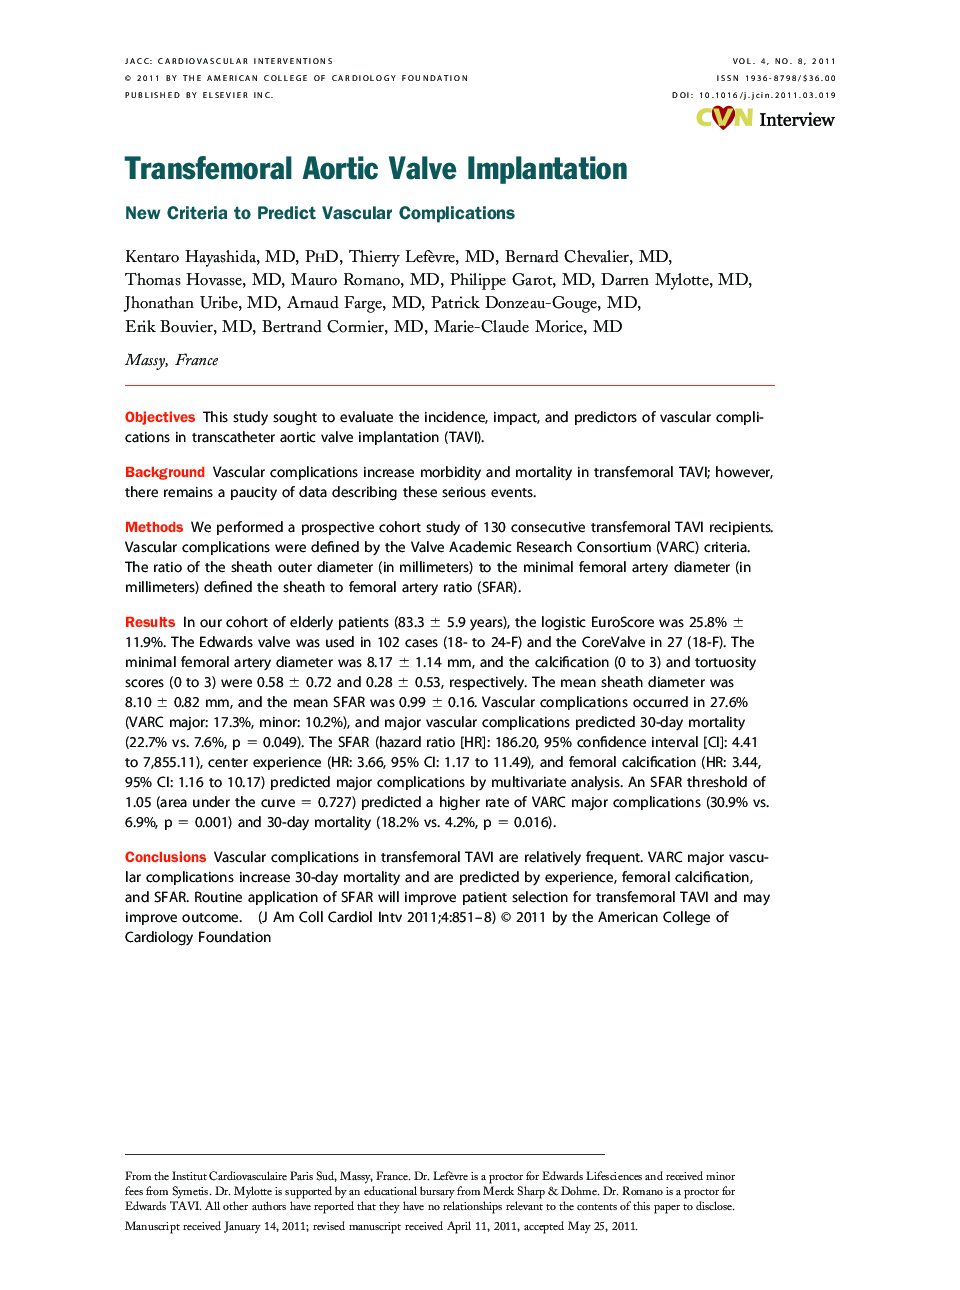 Transfemoral Aortic Valve Implantation : New Criteria to Predict Vascular Complications